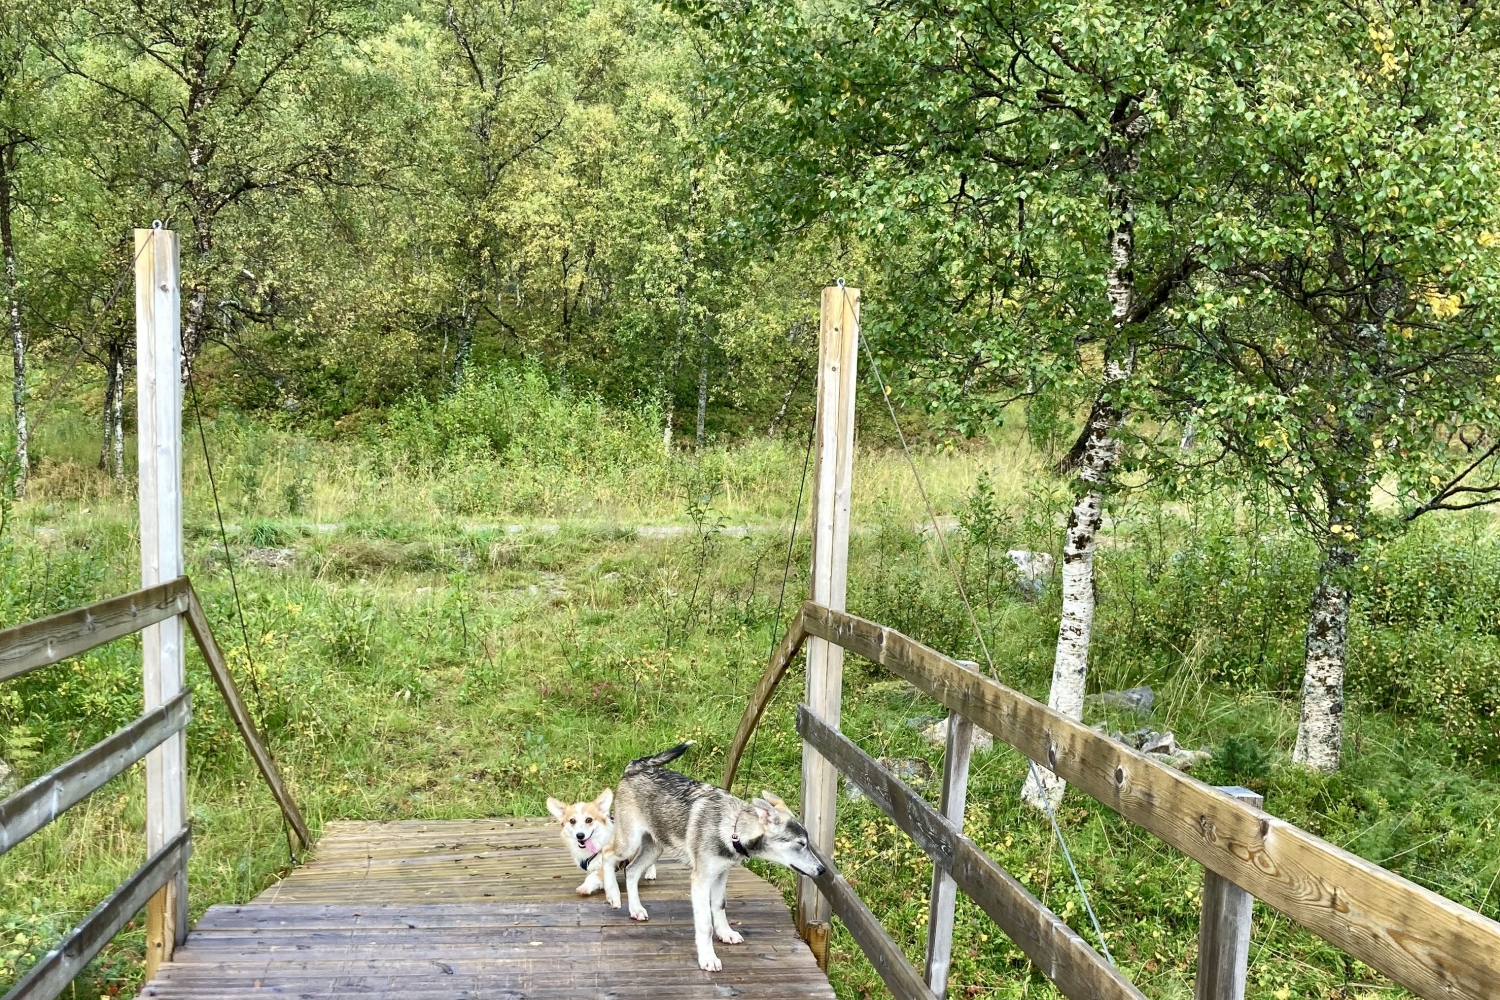 Dogs on a bridge